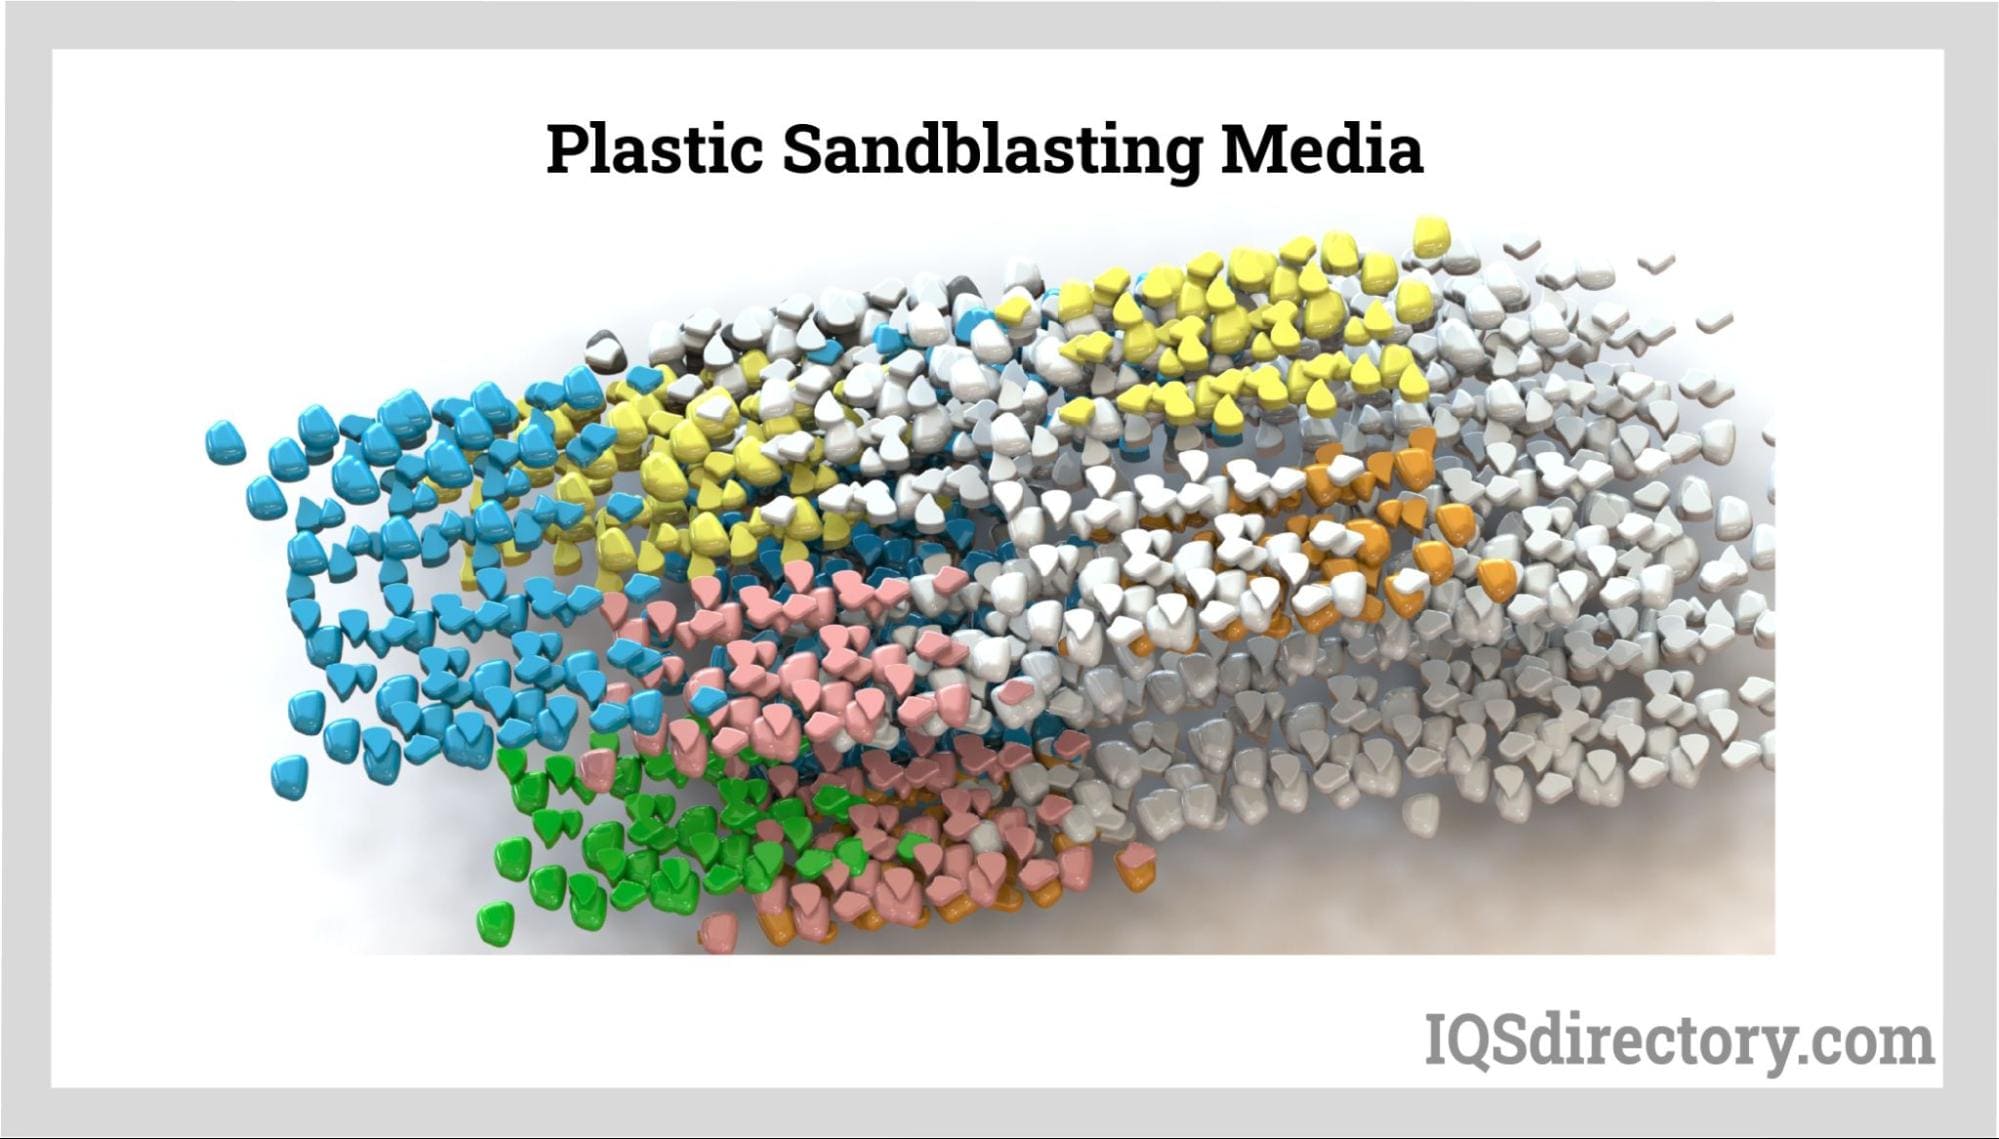 Plastic Sandblasting Media